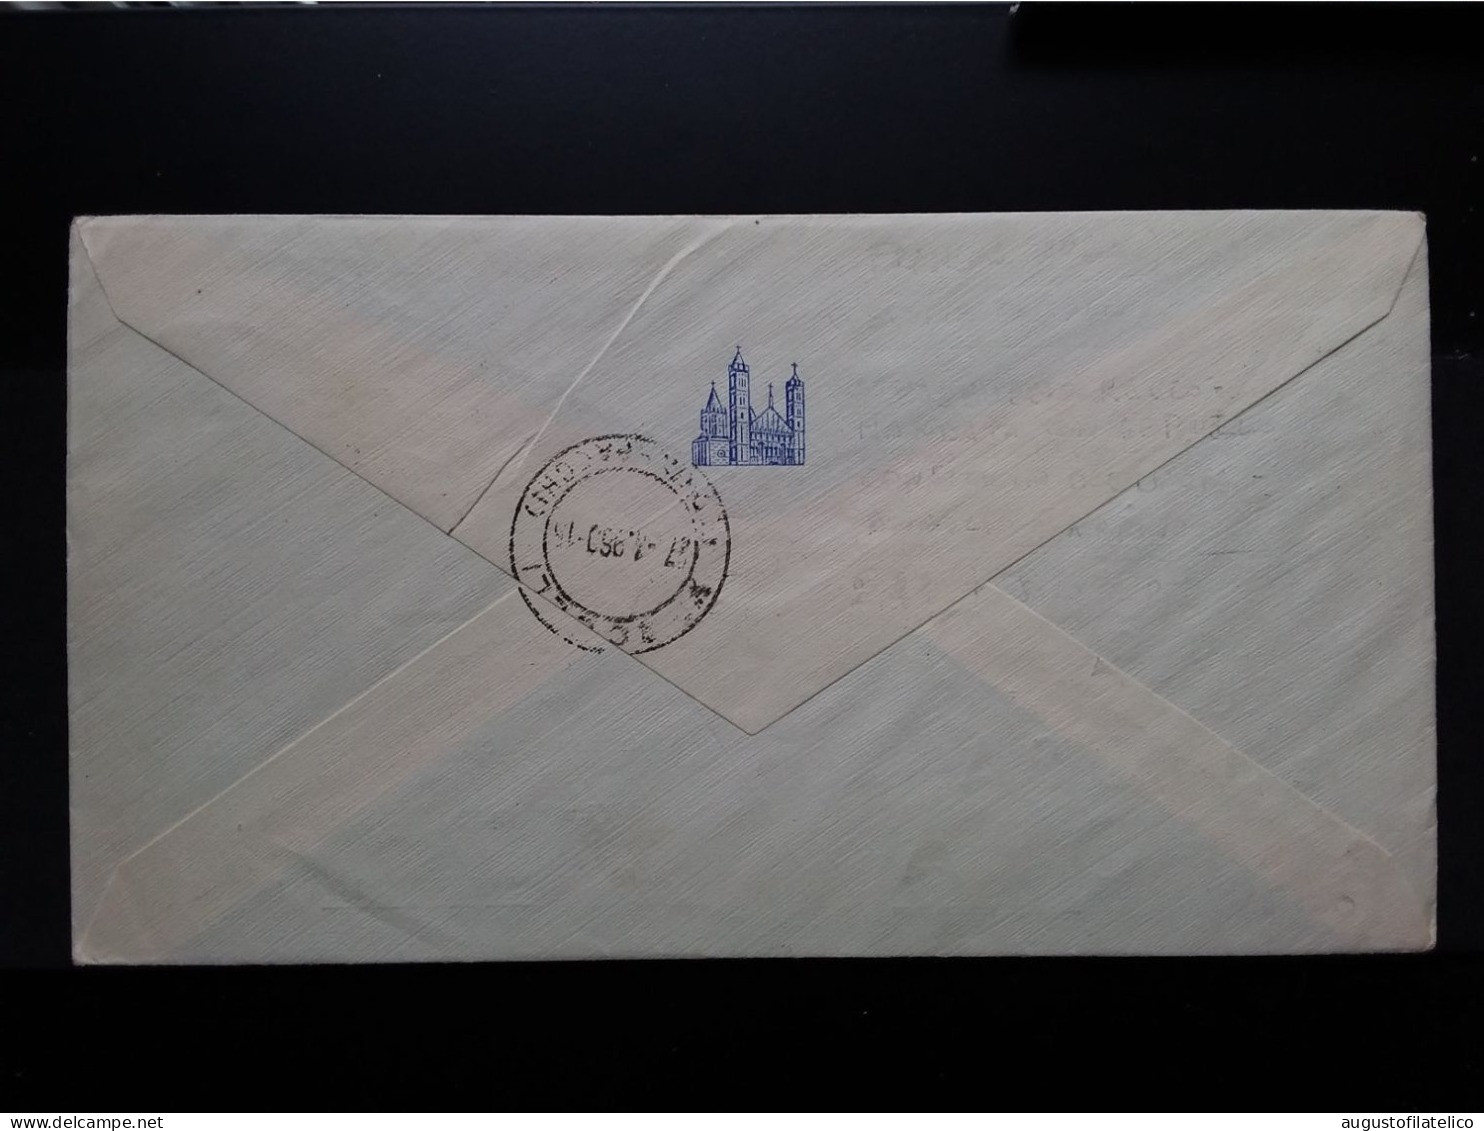 FRANCIA 1960 - Strasburgo - Consiglio D'Europa Su Raccomandata Viaggiata + Spese Postali - Cartas & Documentos